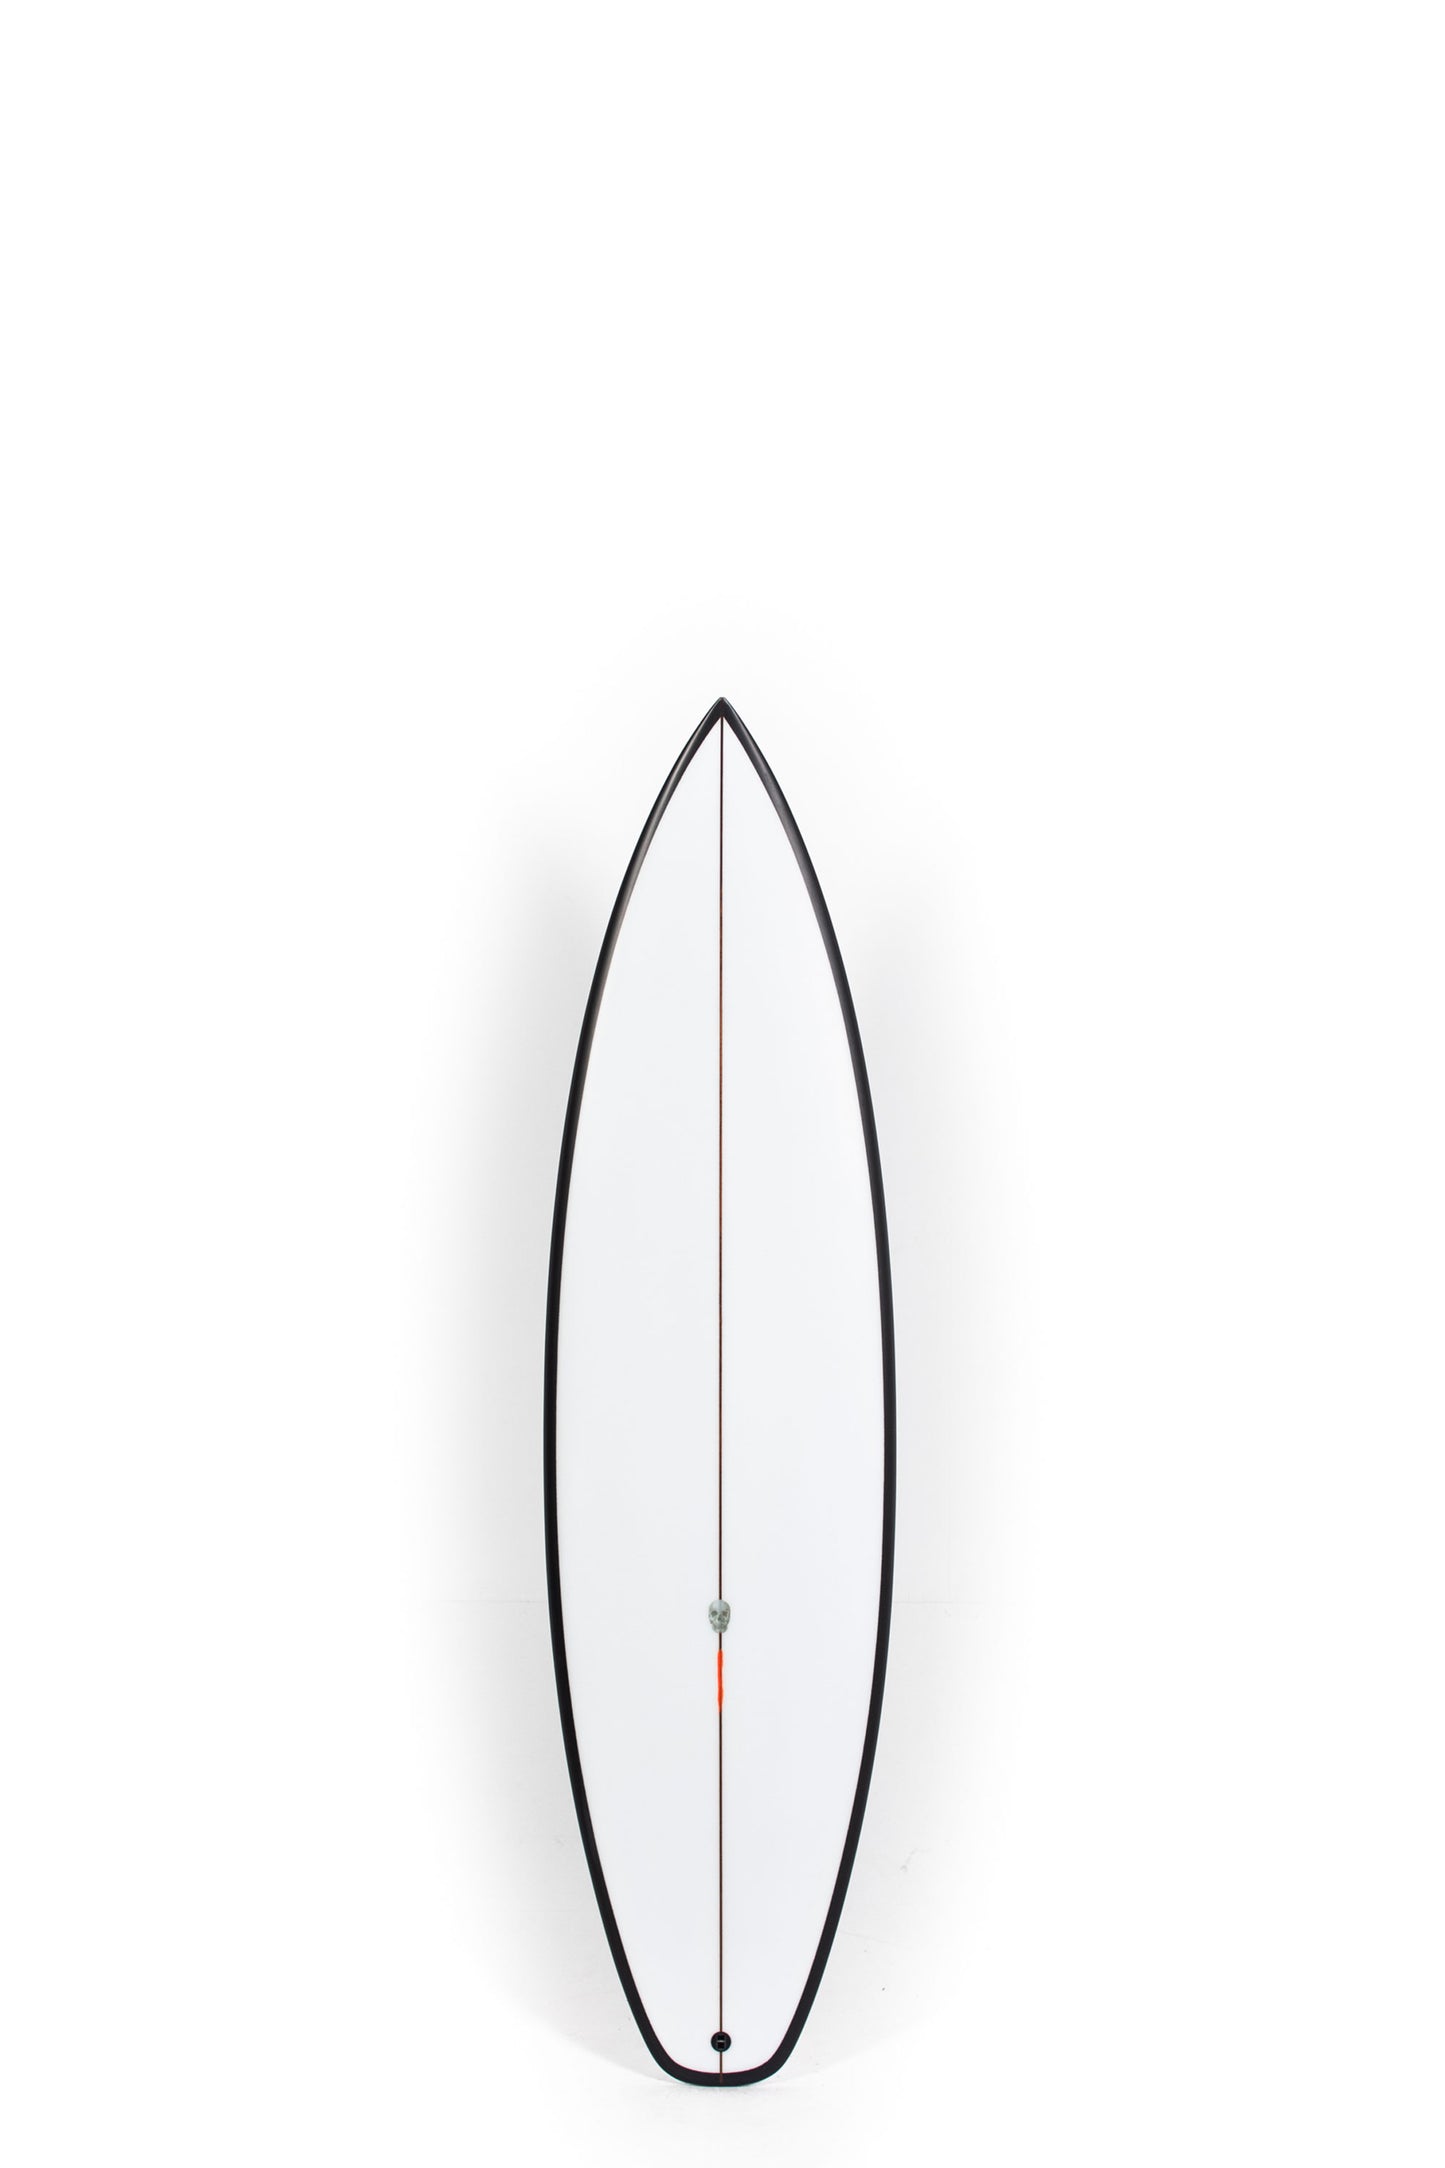 Pukas-Surf-Shop-Christenson-Surfboards-OP-2-Chris-Christenson-6_1